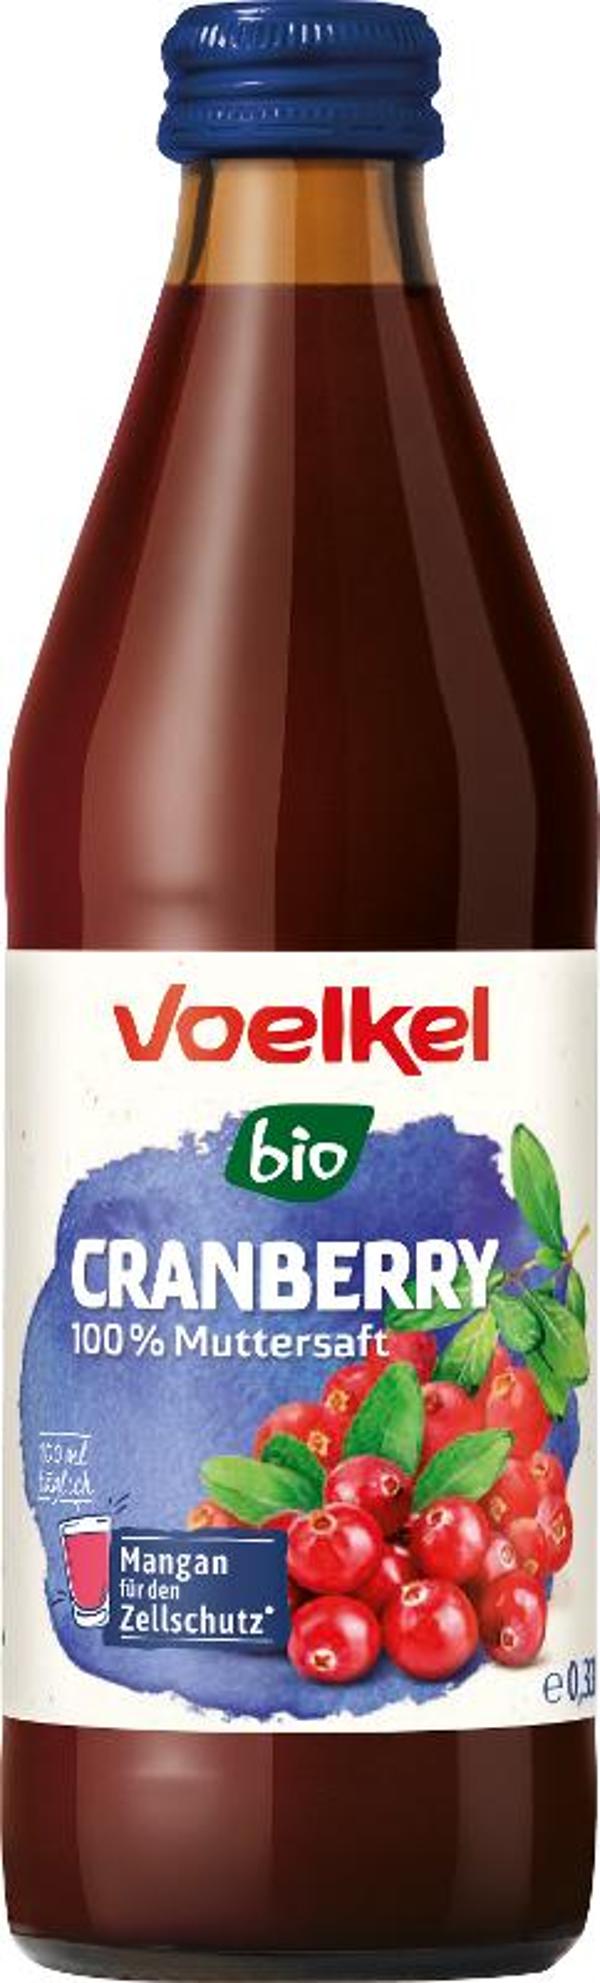 Produktfoto zu Kiste Voelkel Cranberry Saft pur 12x0,33l